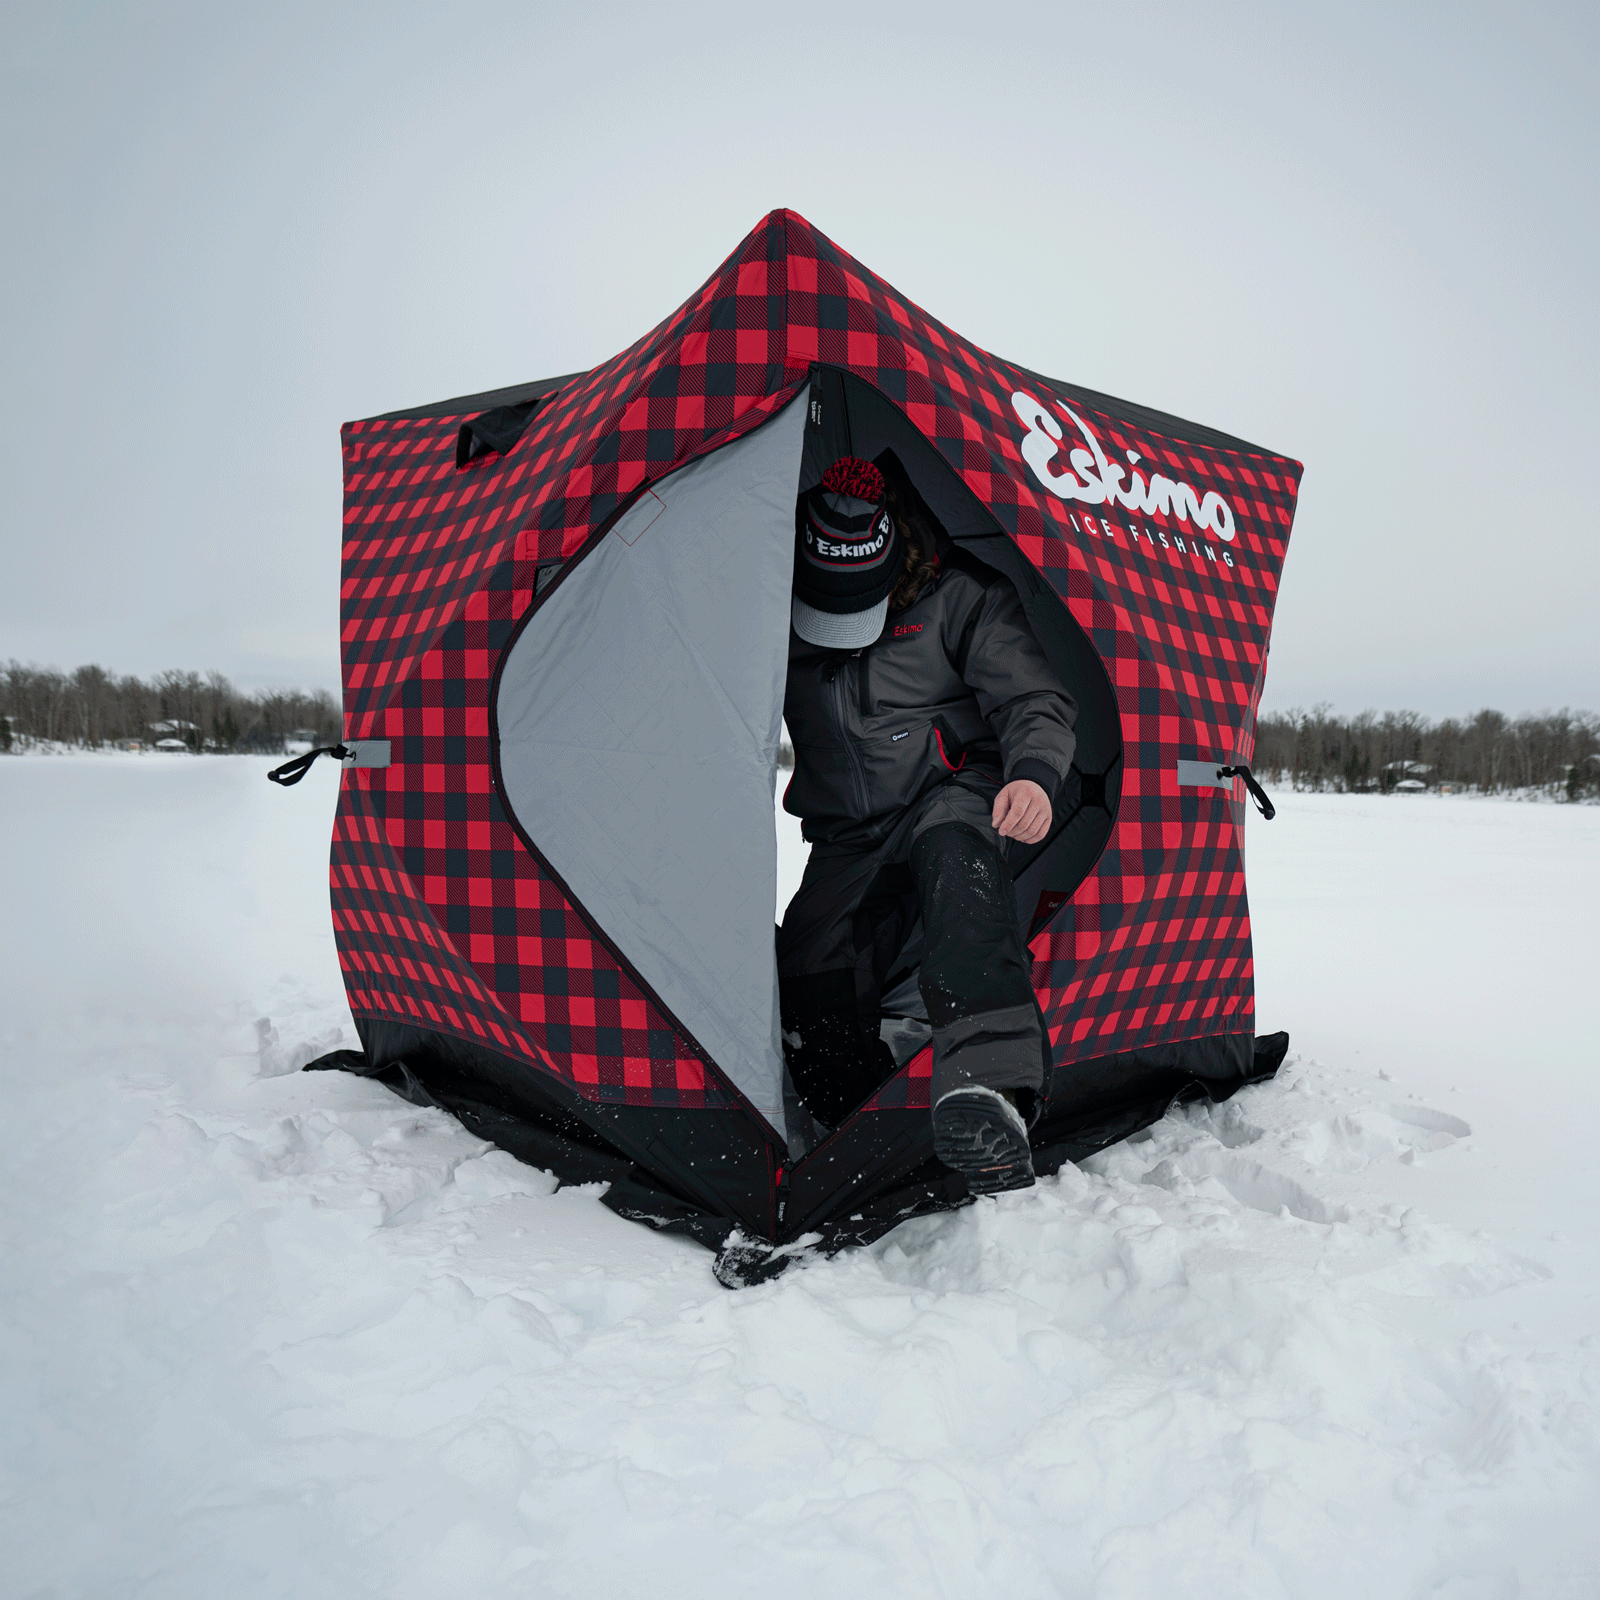 Eskimo Quickfish 3i Limited Edition Pop-Up Shelter